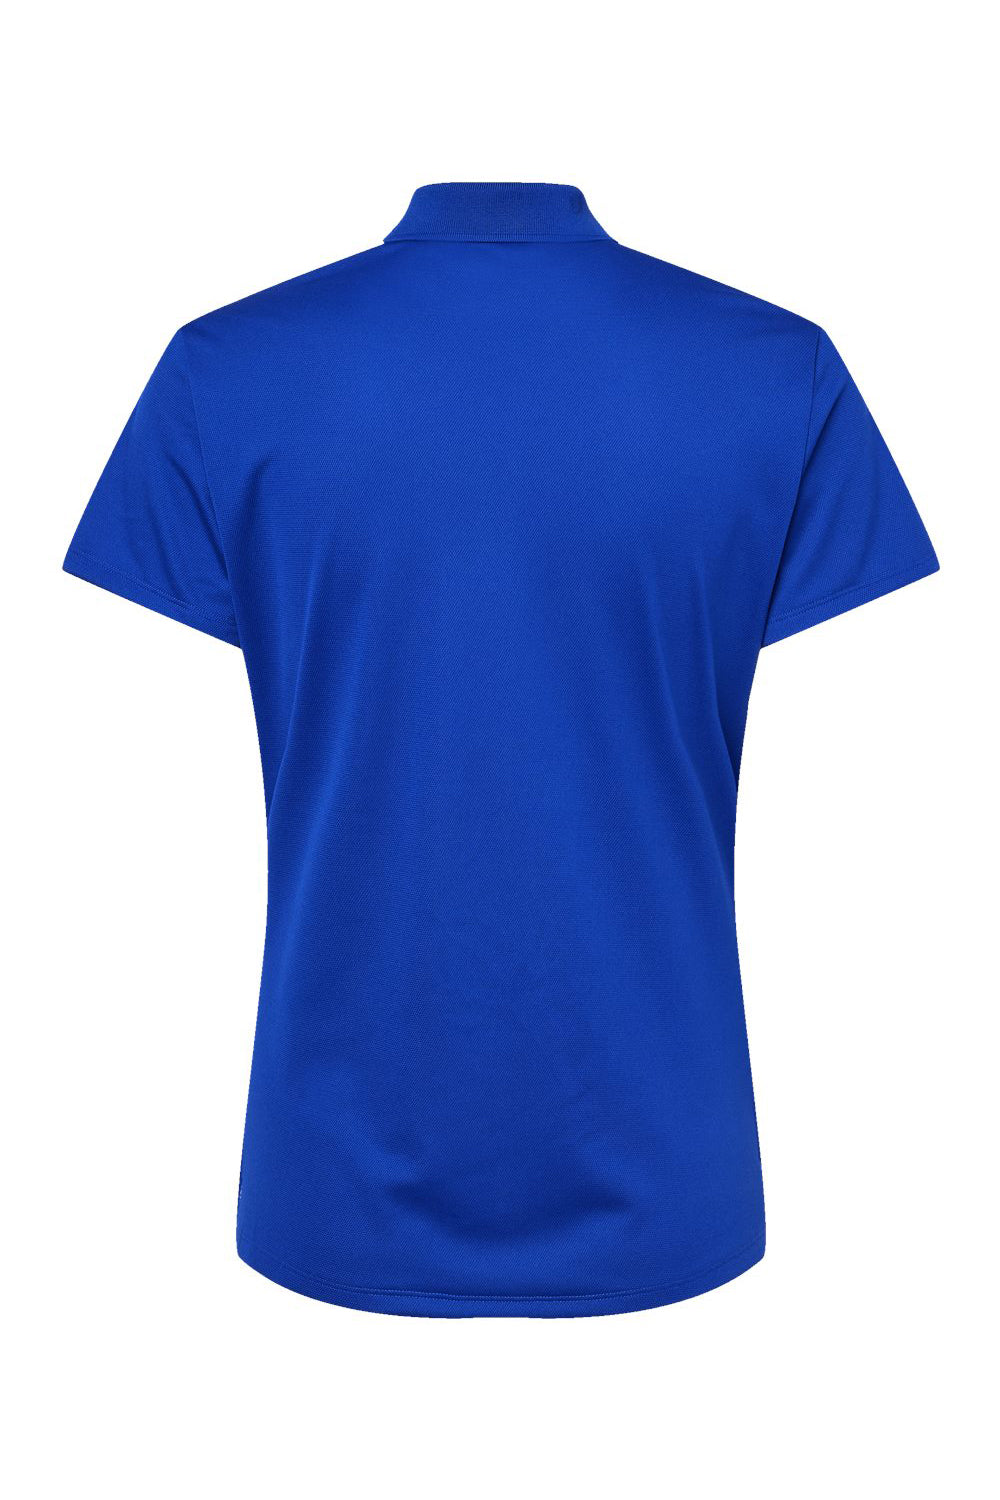 Adidas A431 Womens Basic Short Sleeve Polo Shirt Collegiate Royal Blue Flat Back